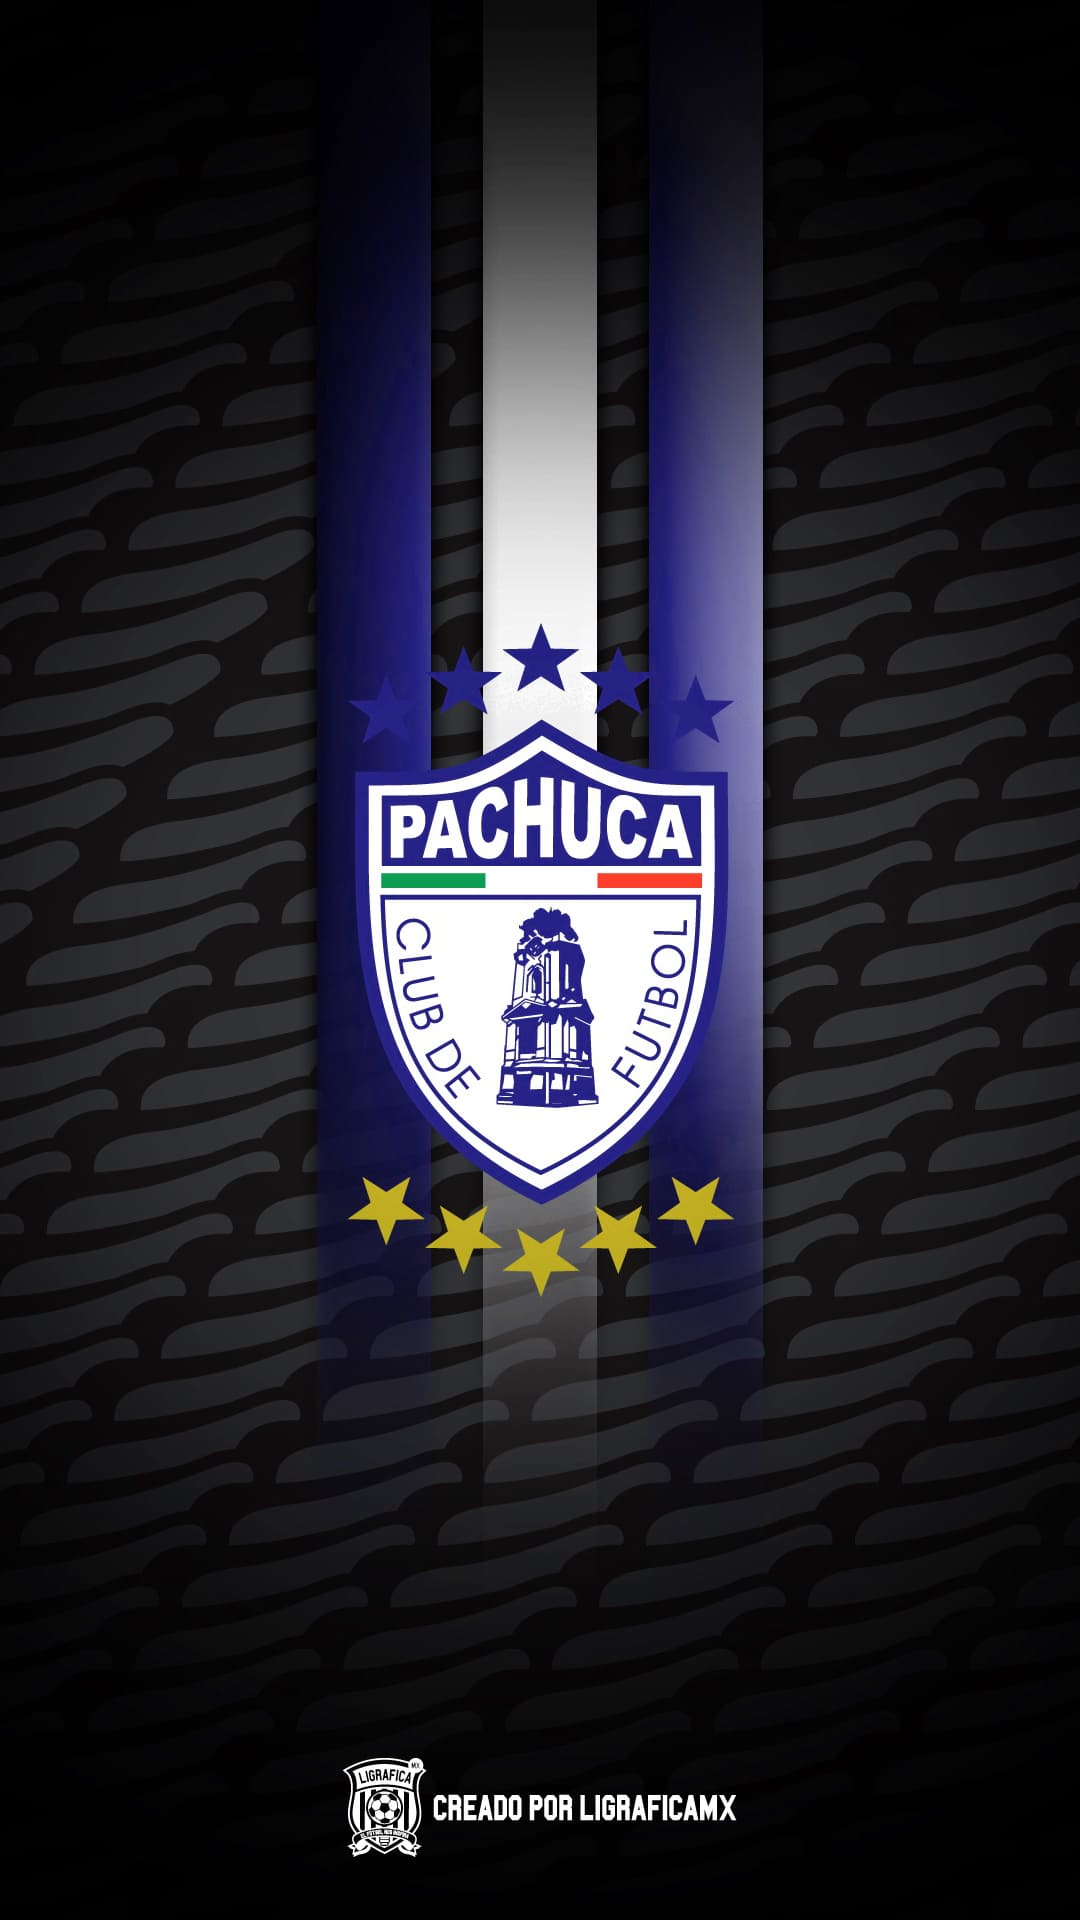 Pachuca Wallpapers